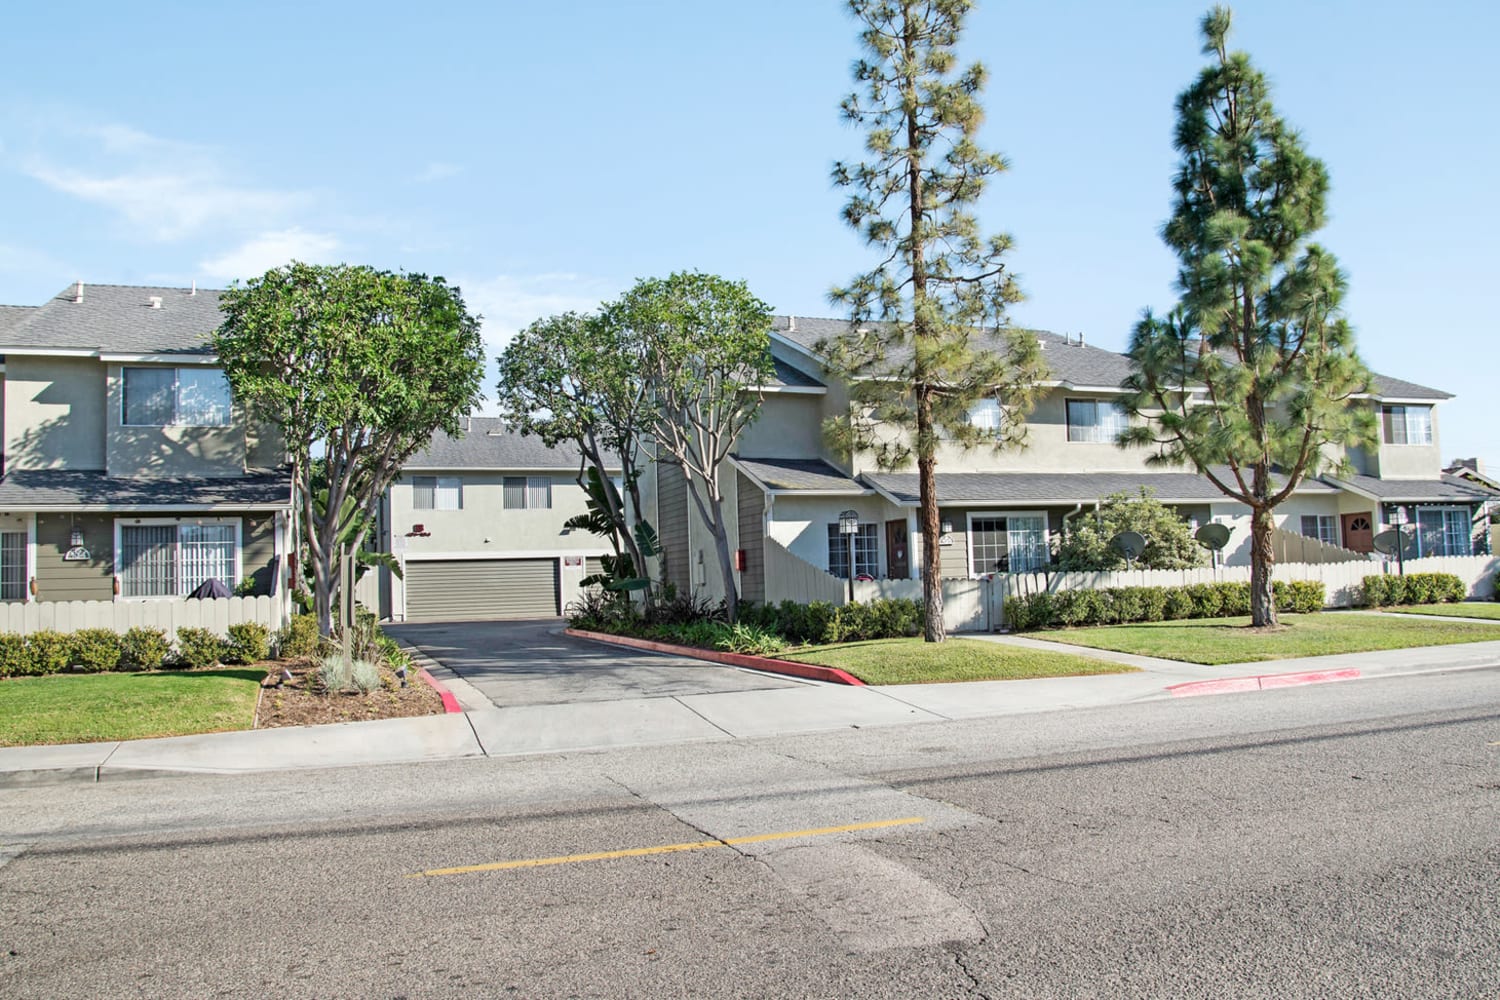 Greystone apartments in Costa Mesa, California